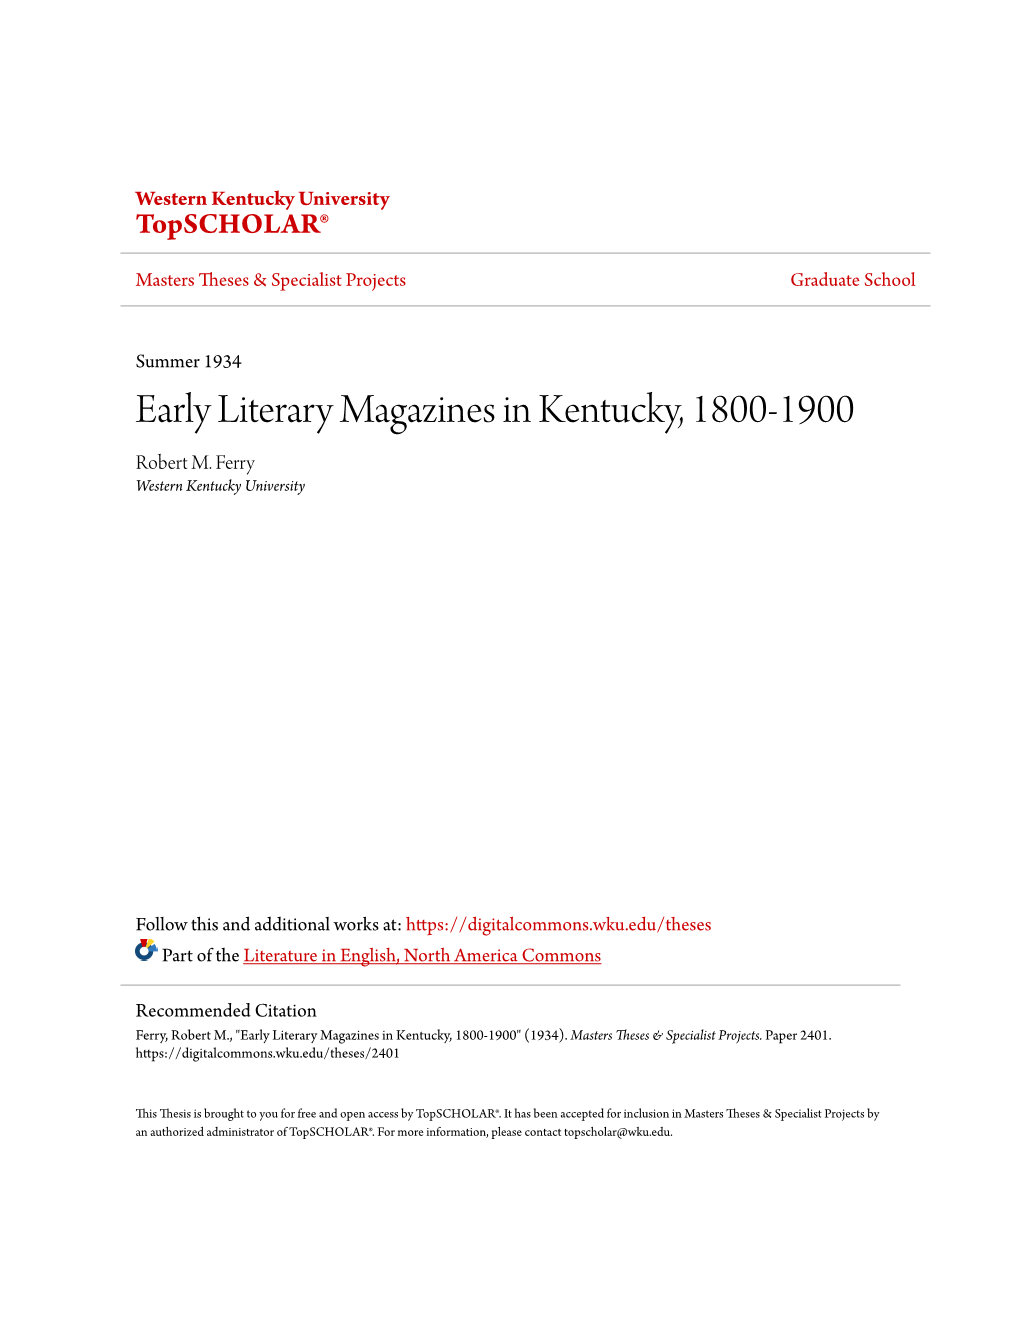 Early Literary Magazines in Kentucky, 1800-1900 Robert M